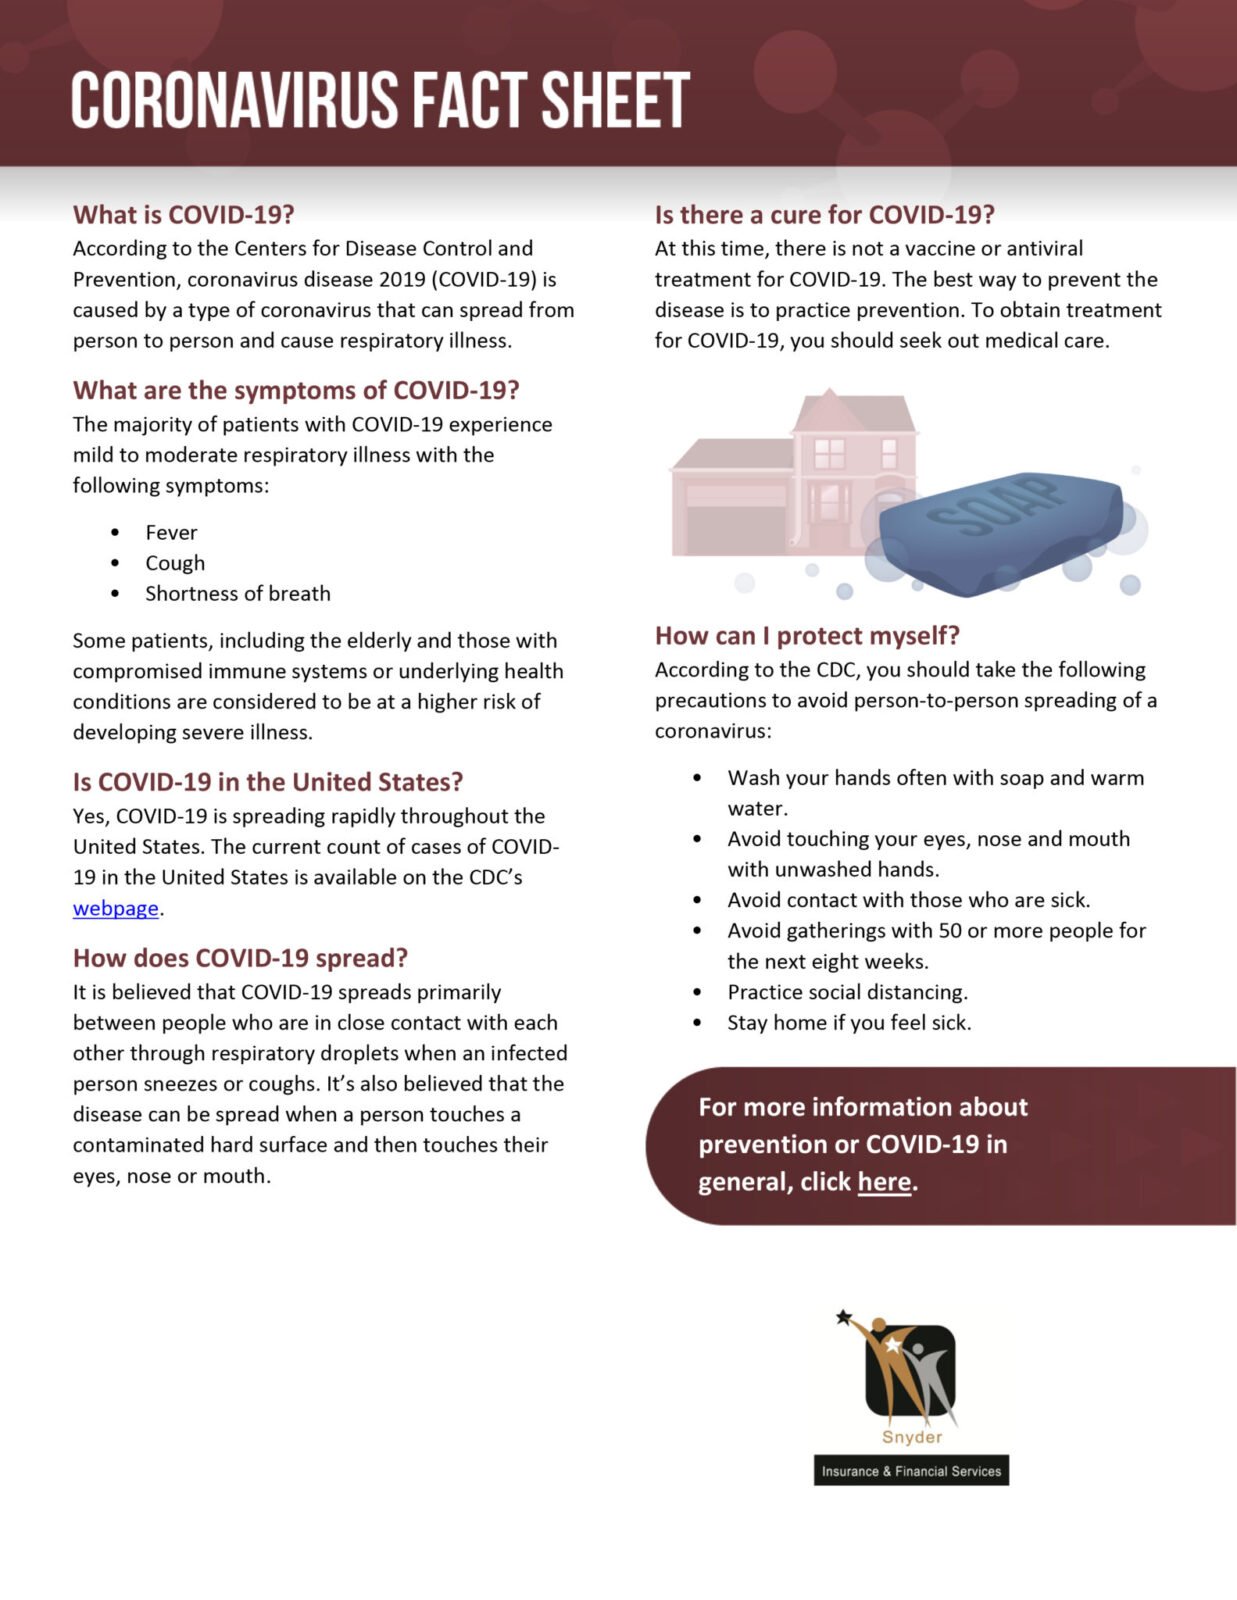 Coronavirus Fact Sheet Poster - Snyder Insurance & Financial Services